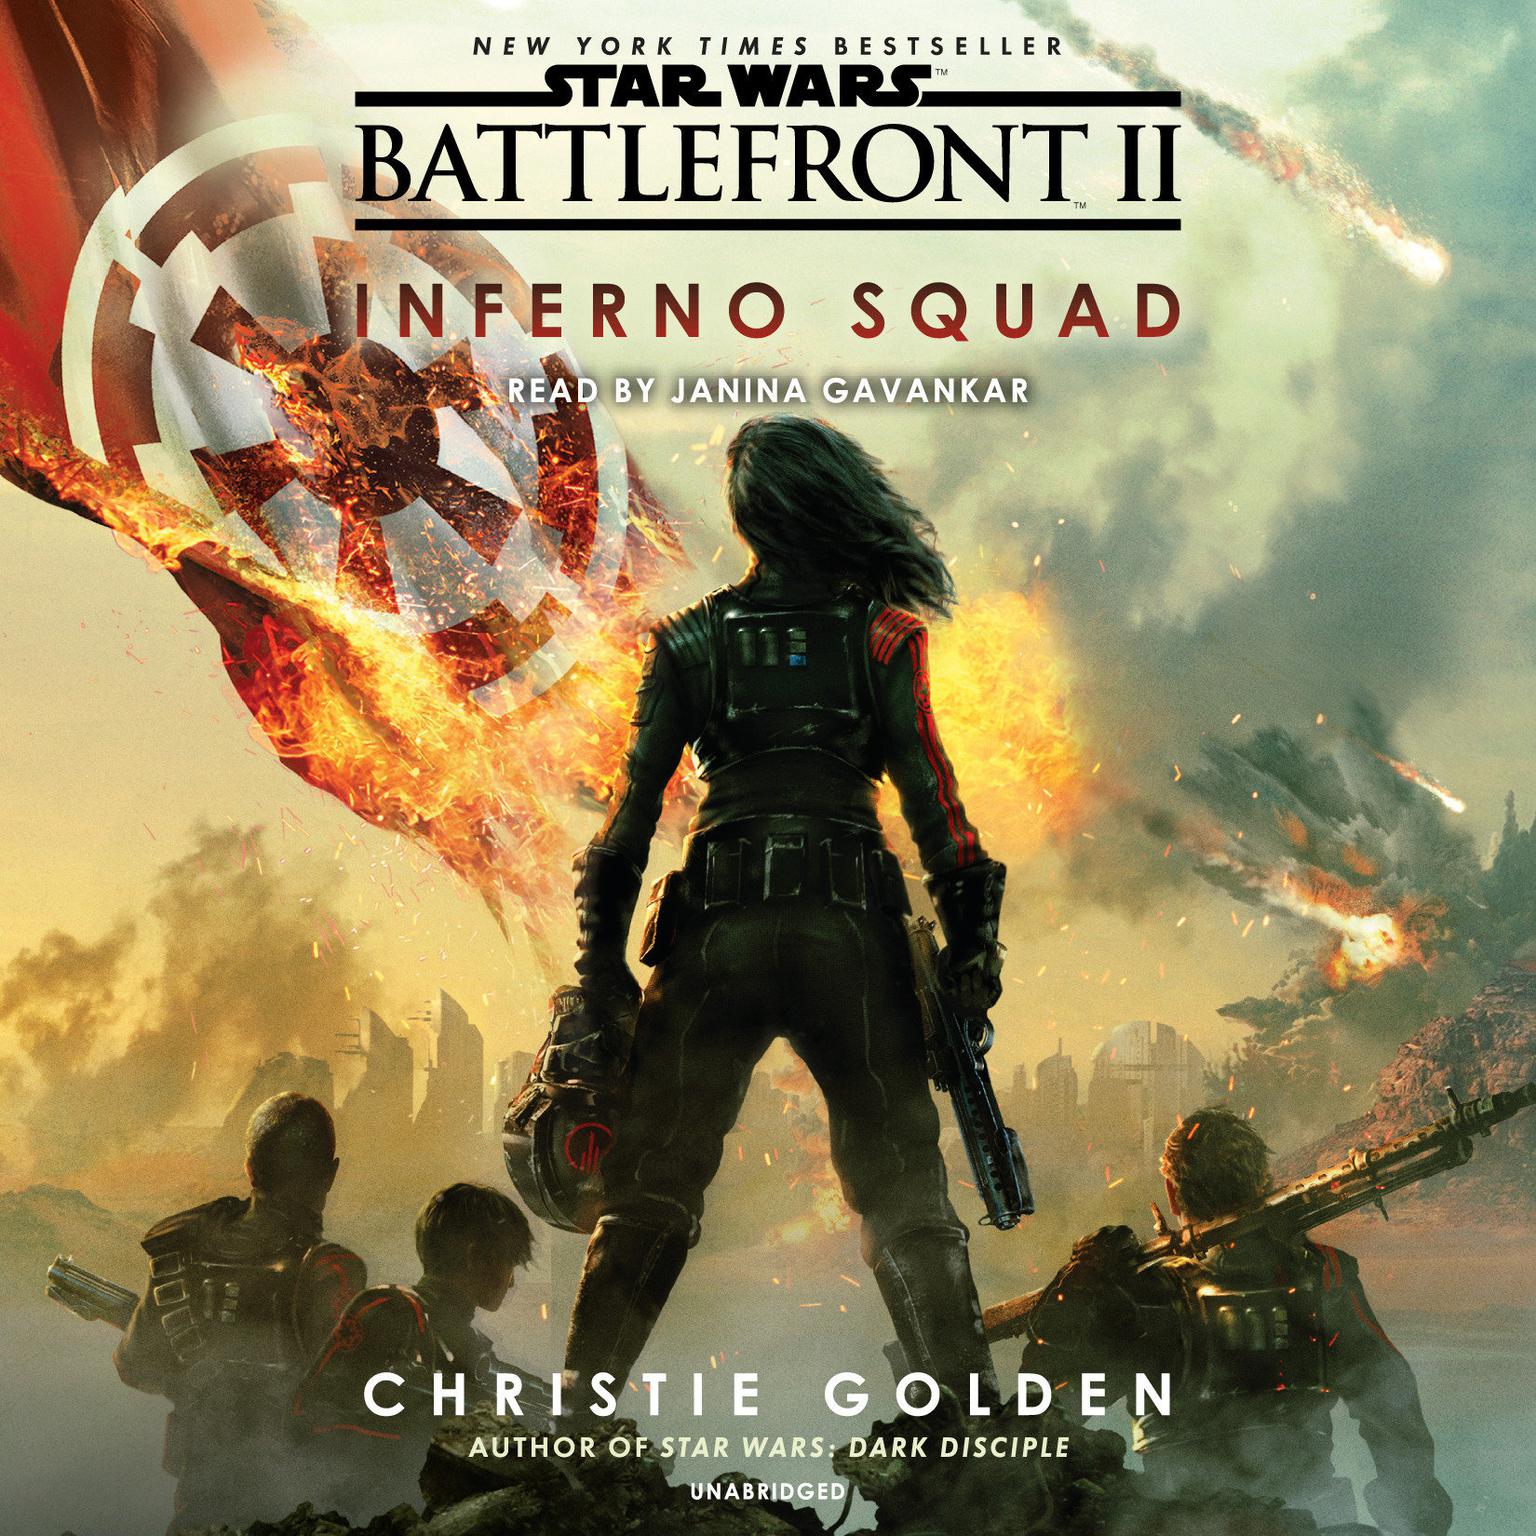 Battlefront II: Inferno Squad (Star Wars) Audiobook, by Christie Golden